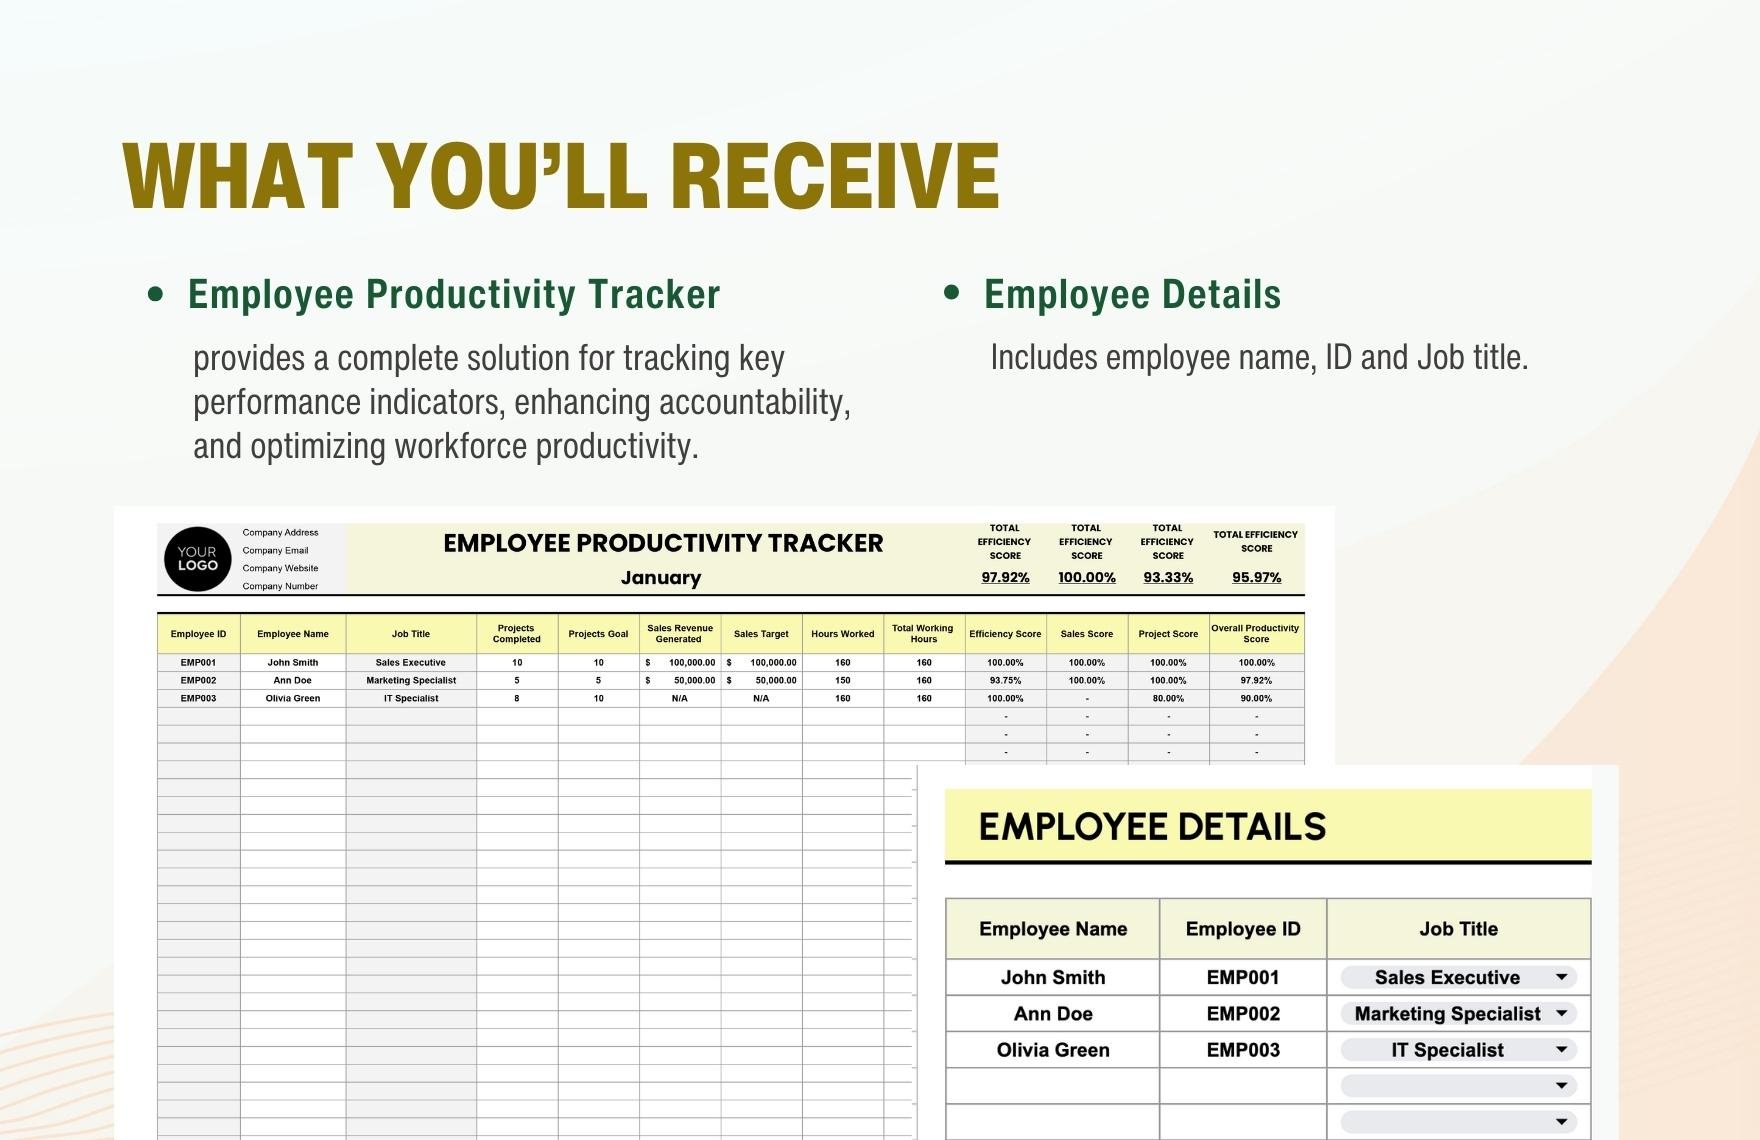 Employee Productivity Tracker HR Template